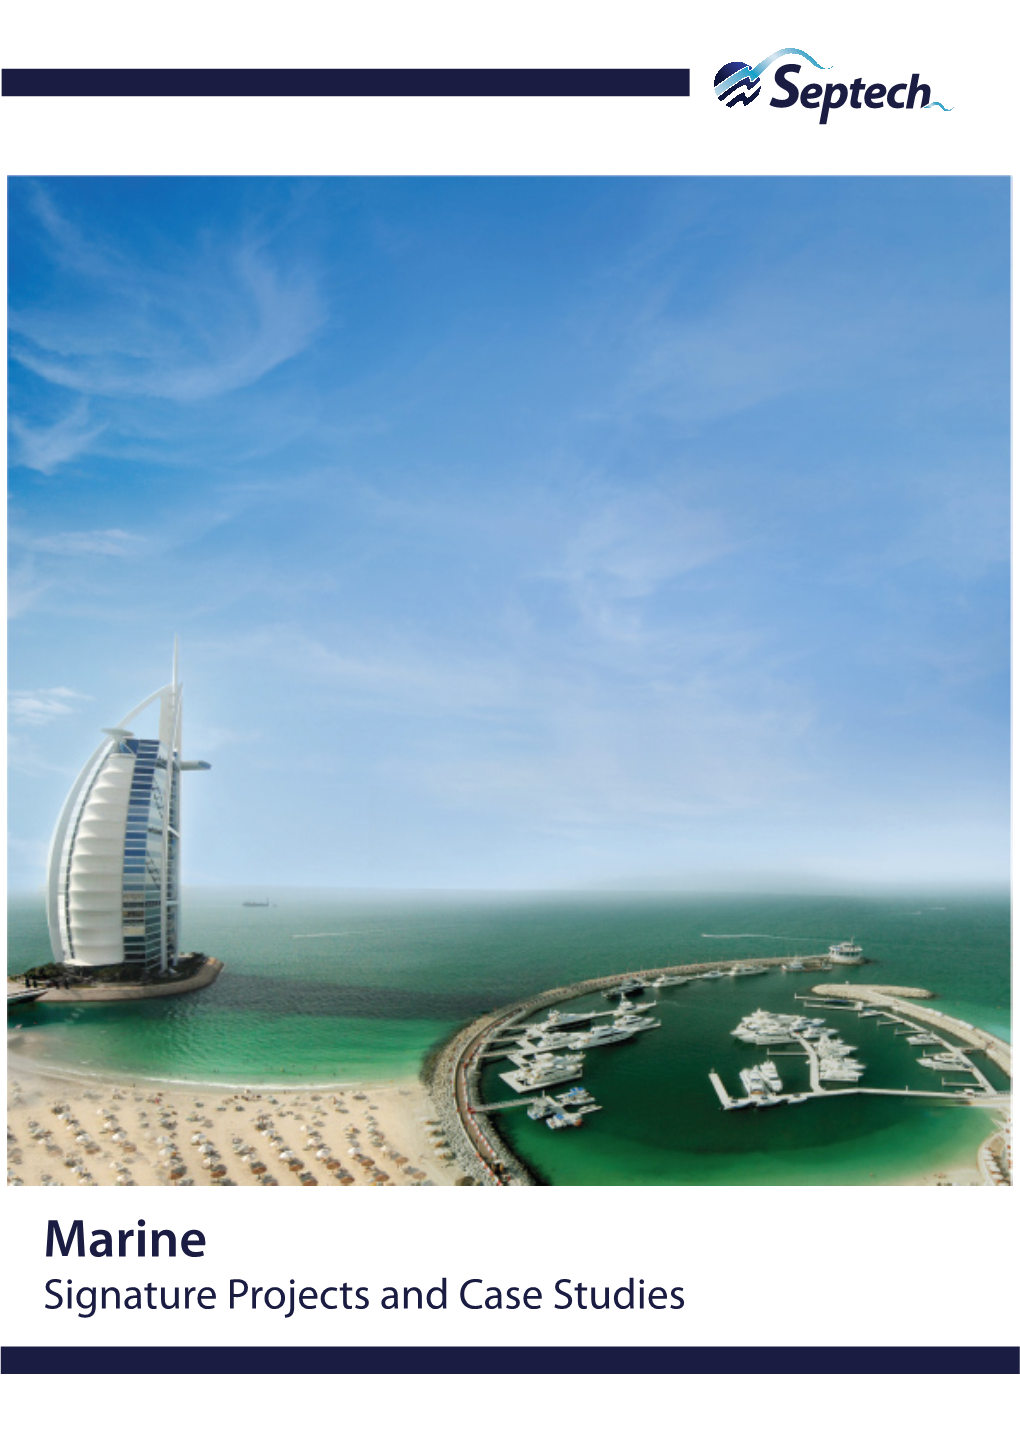 Marine Signature Projects and Case Studies Dubai Festival City Marina